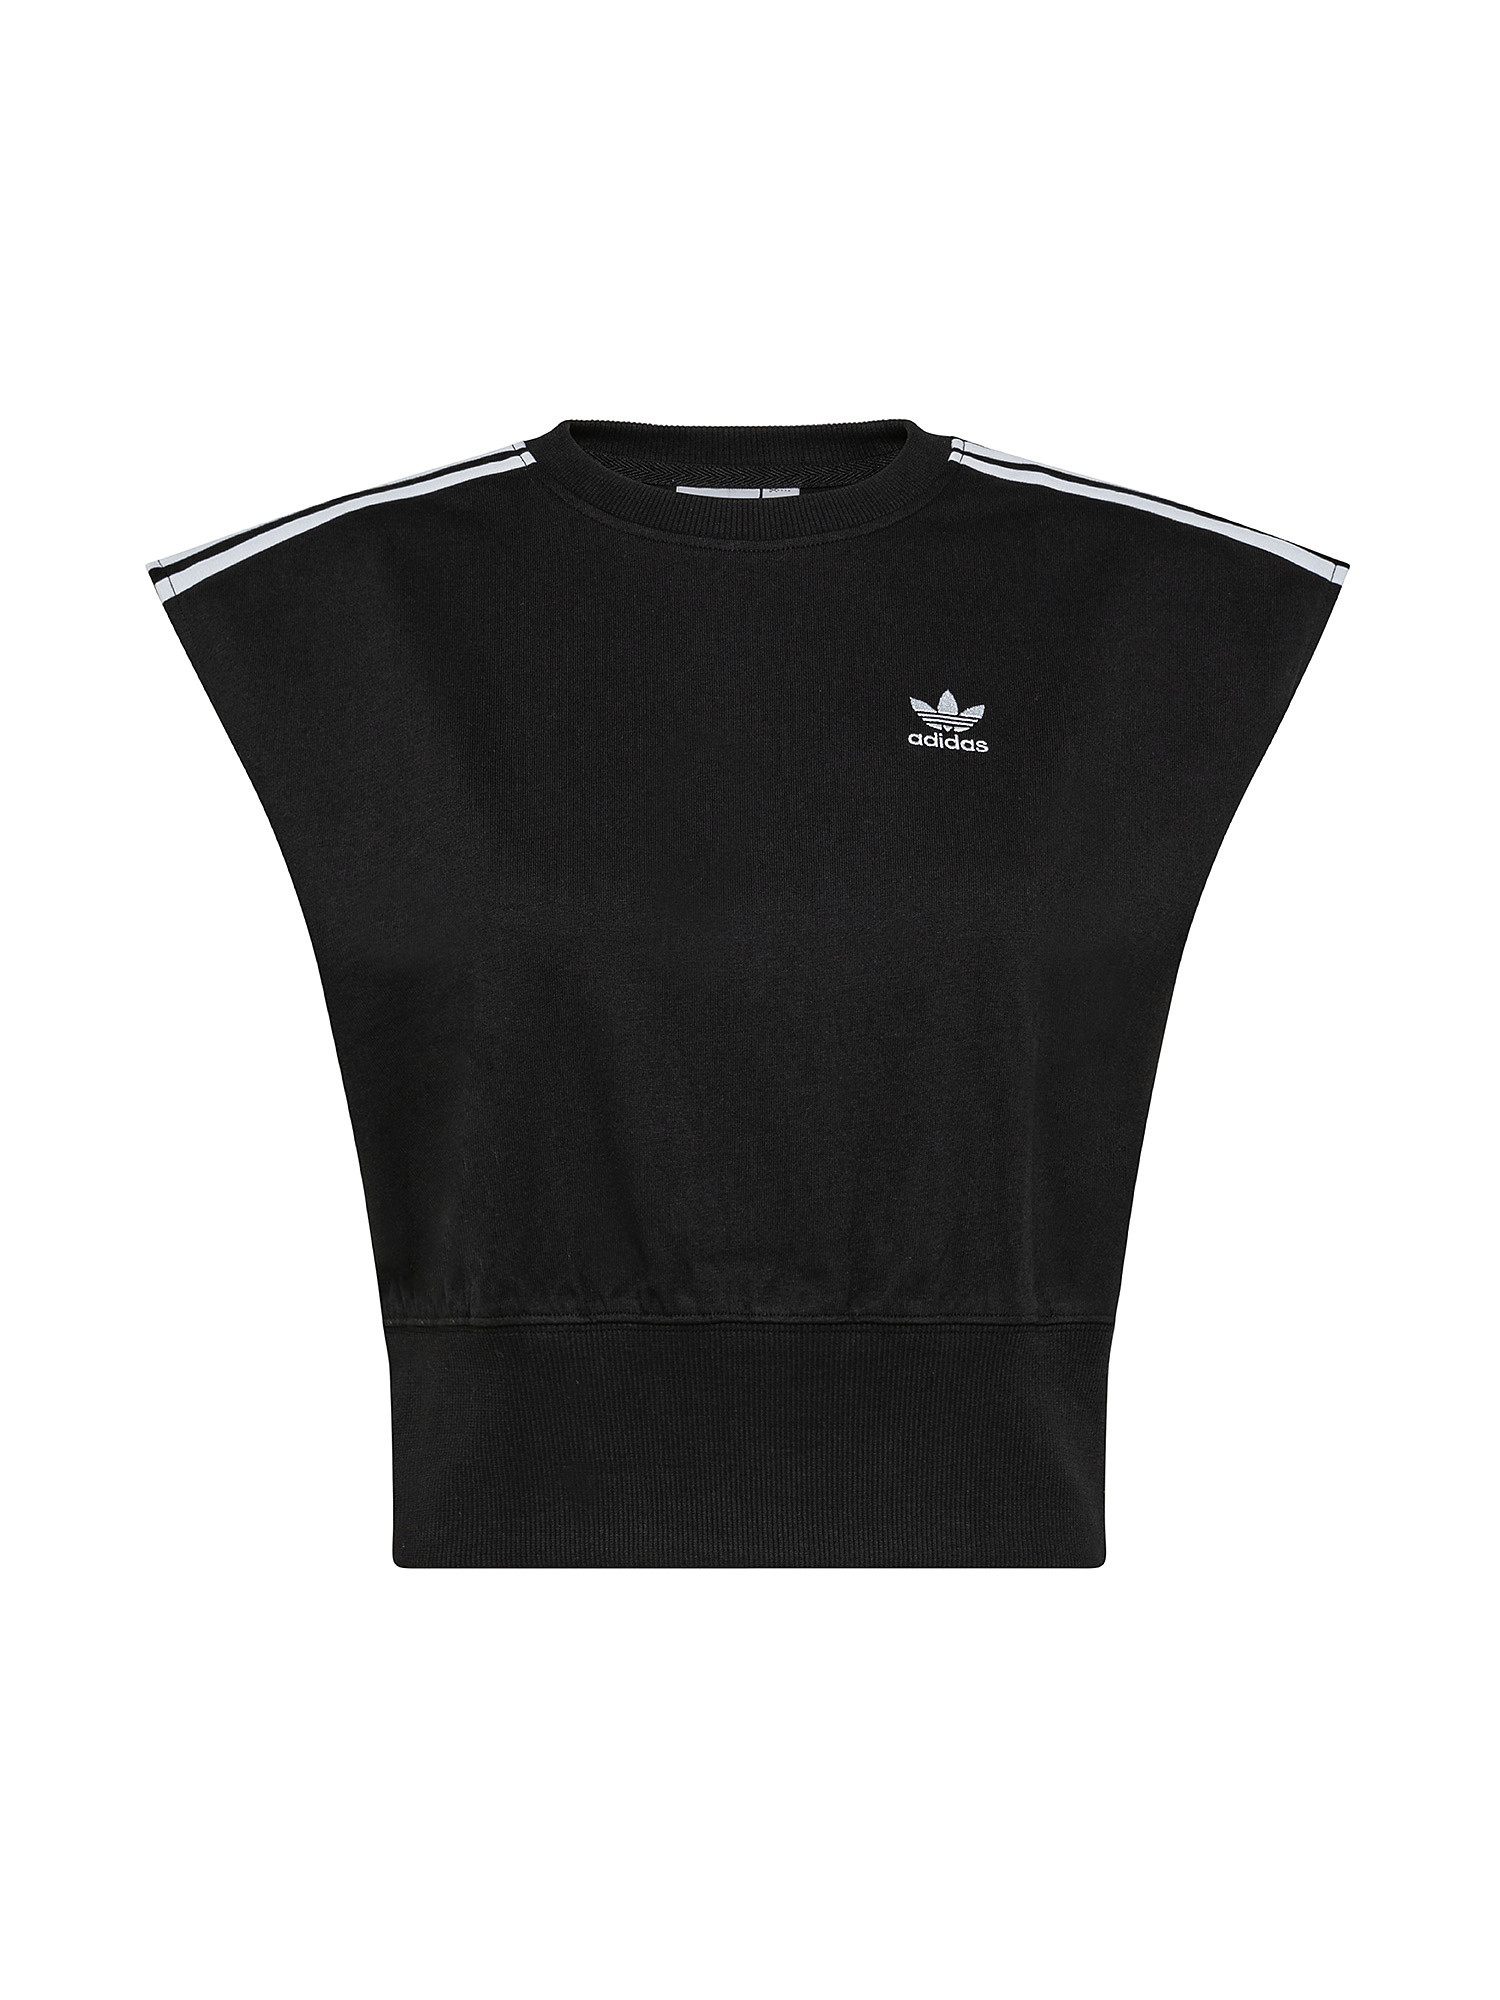 Adidas - T-shirt adicolor con logo, Nero, large image number 0